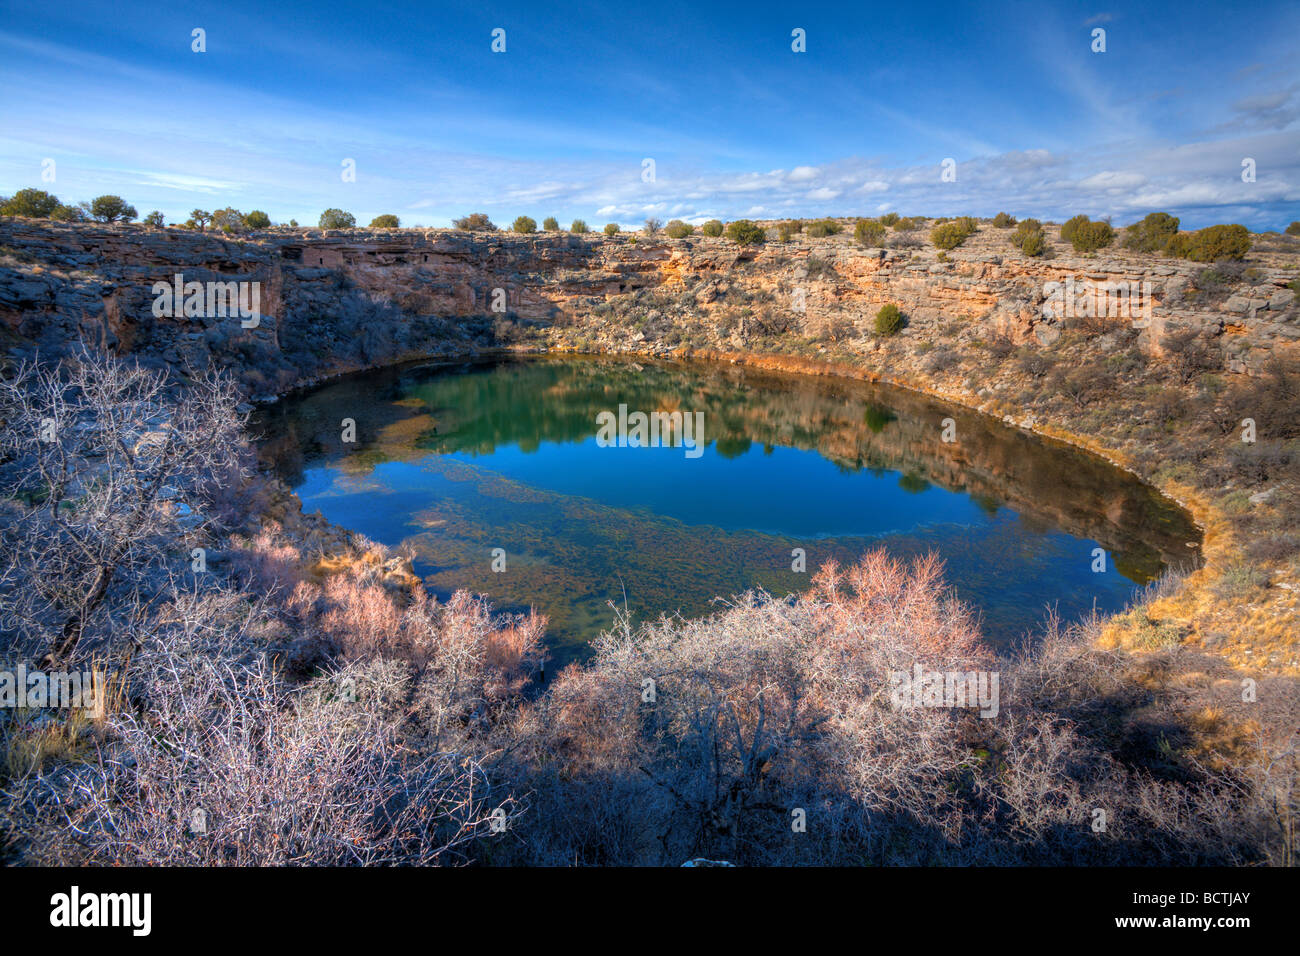 Montezuma well water filled sinkhole in Arizona high desert HDR image Stock Photo